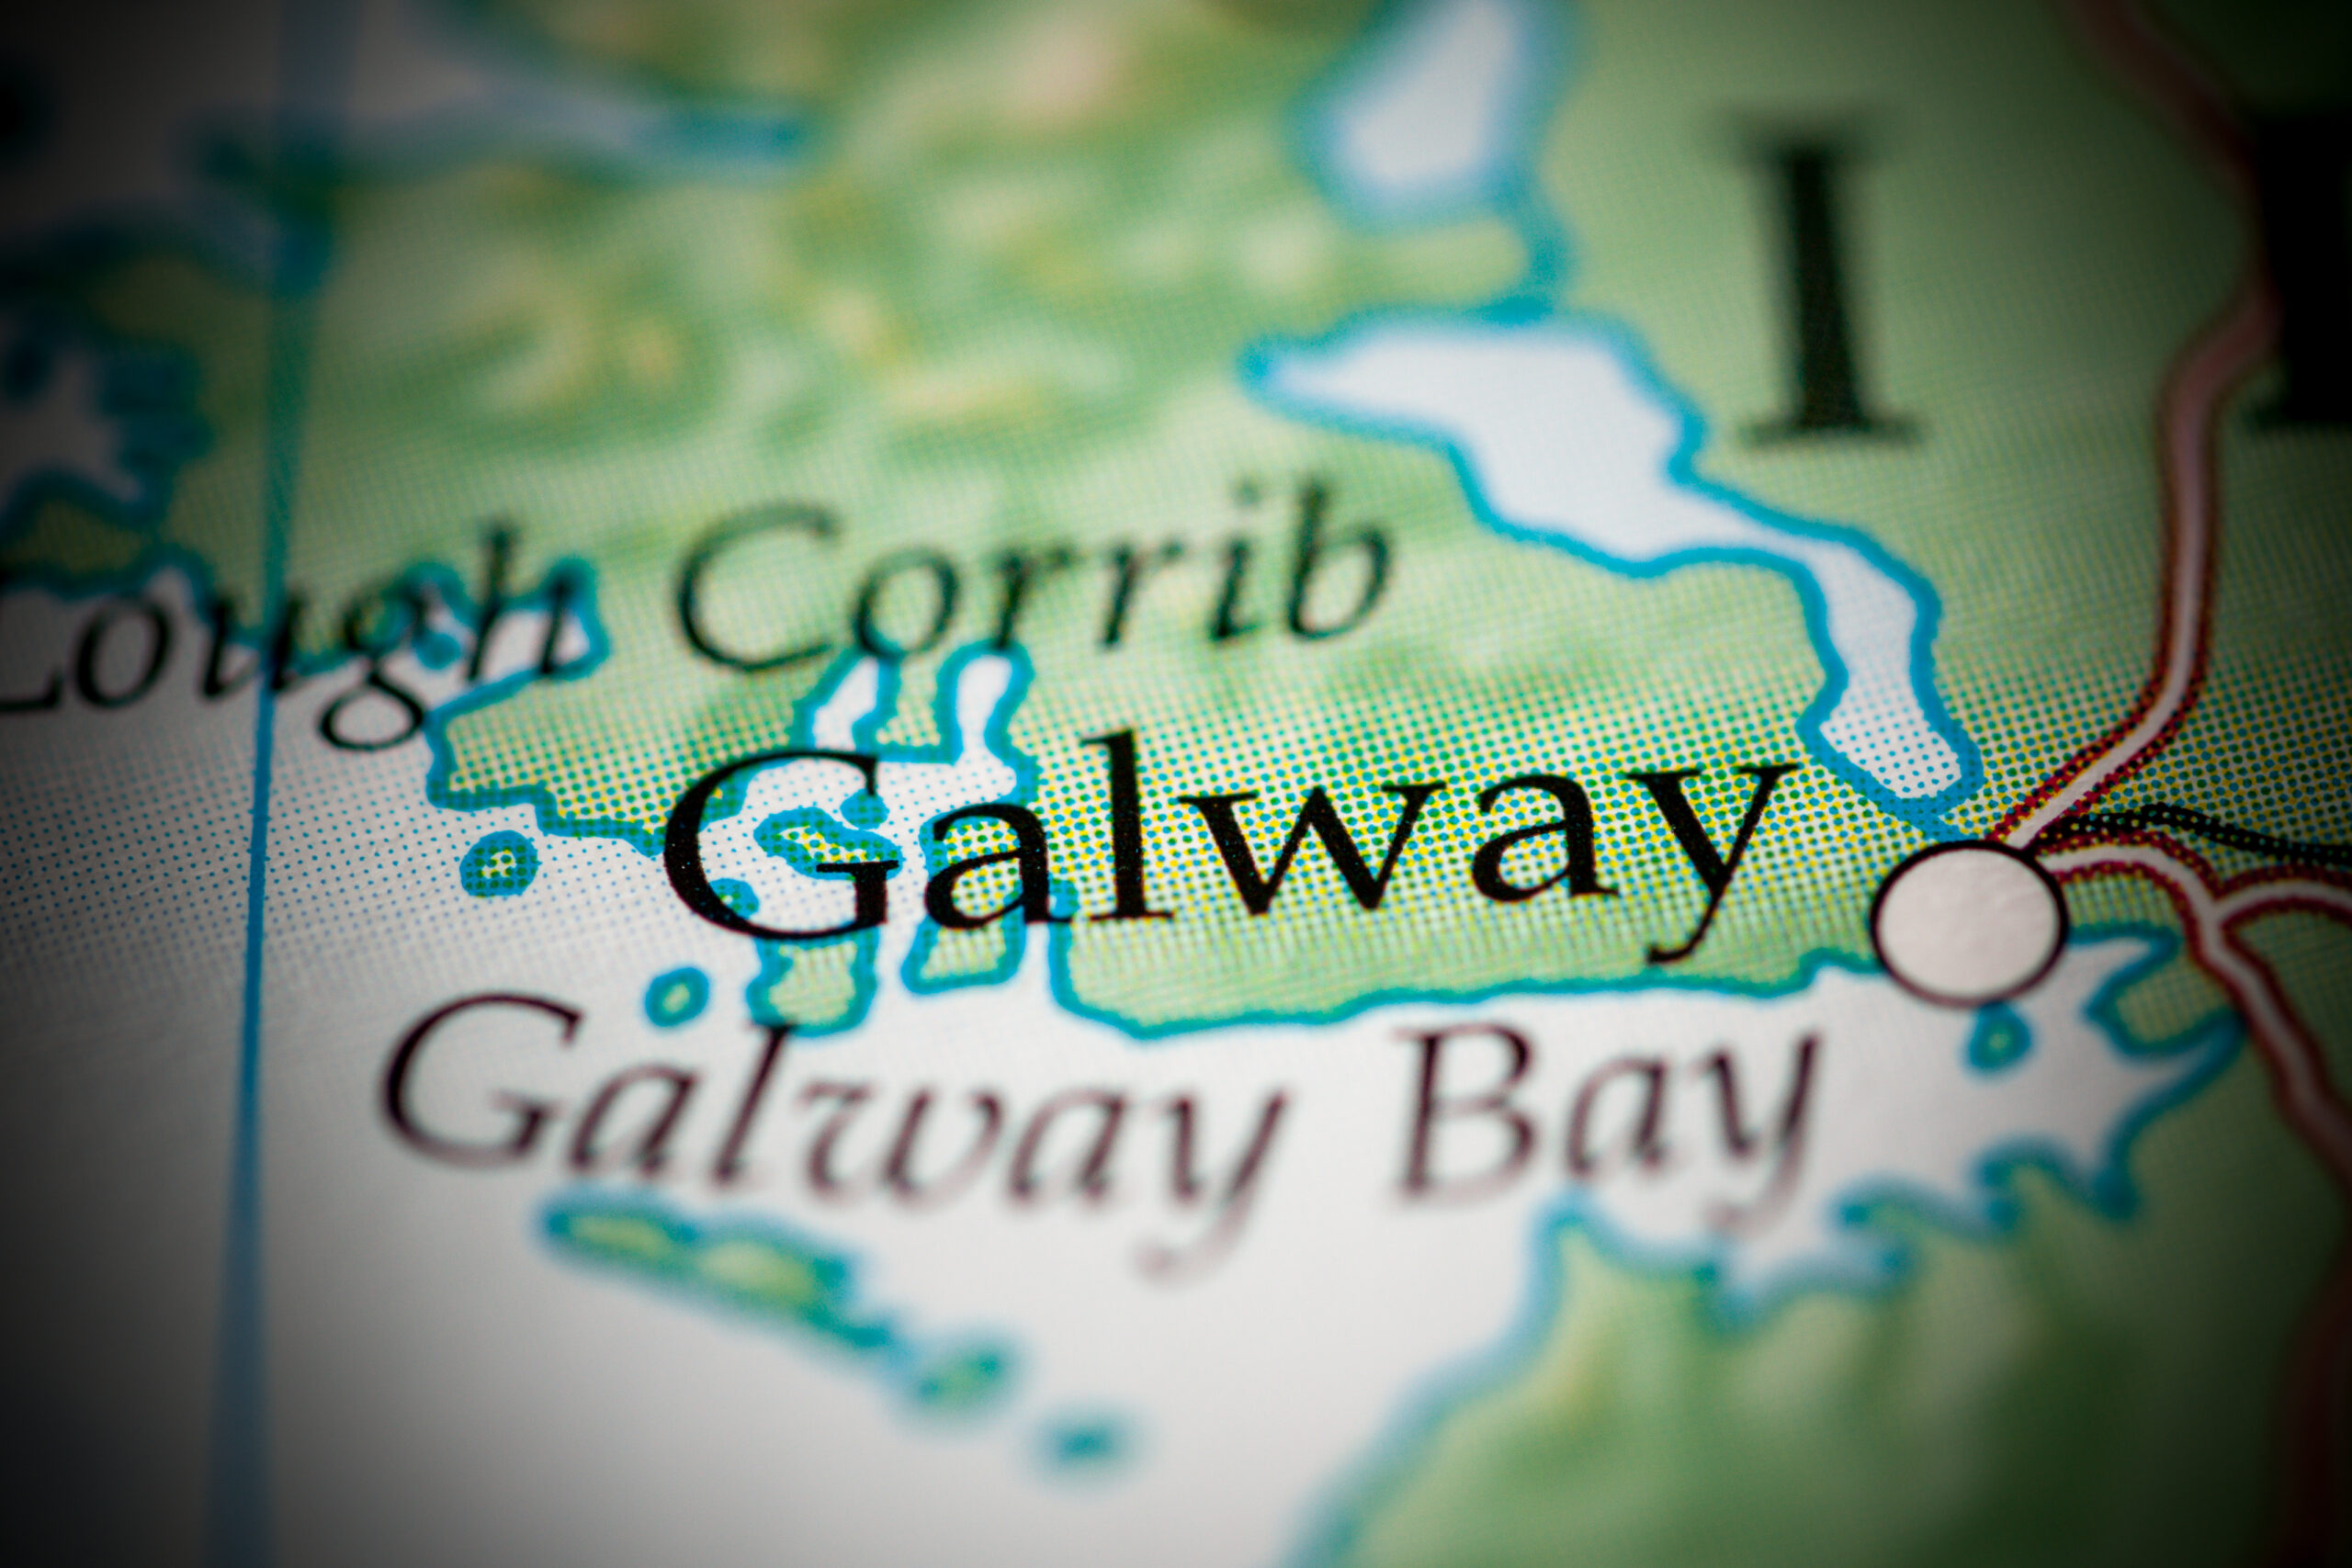 Galway. Ireland